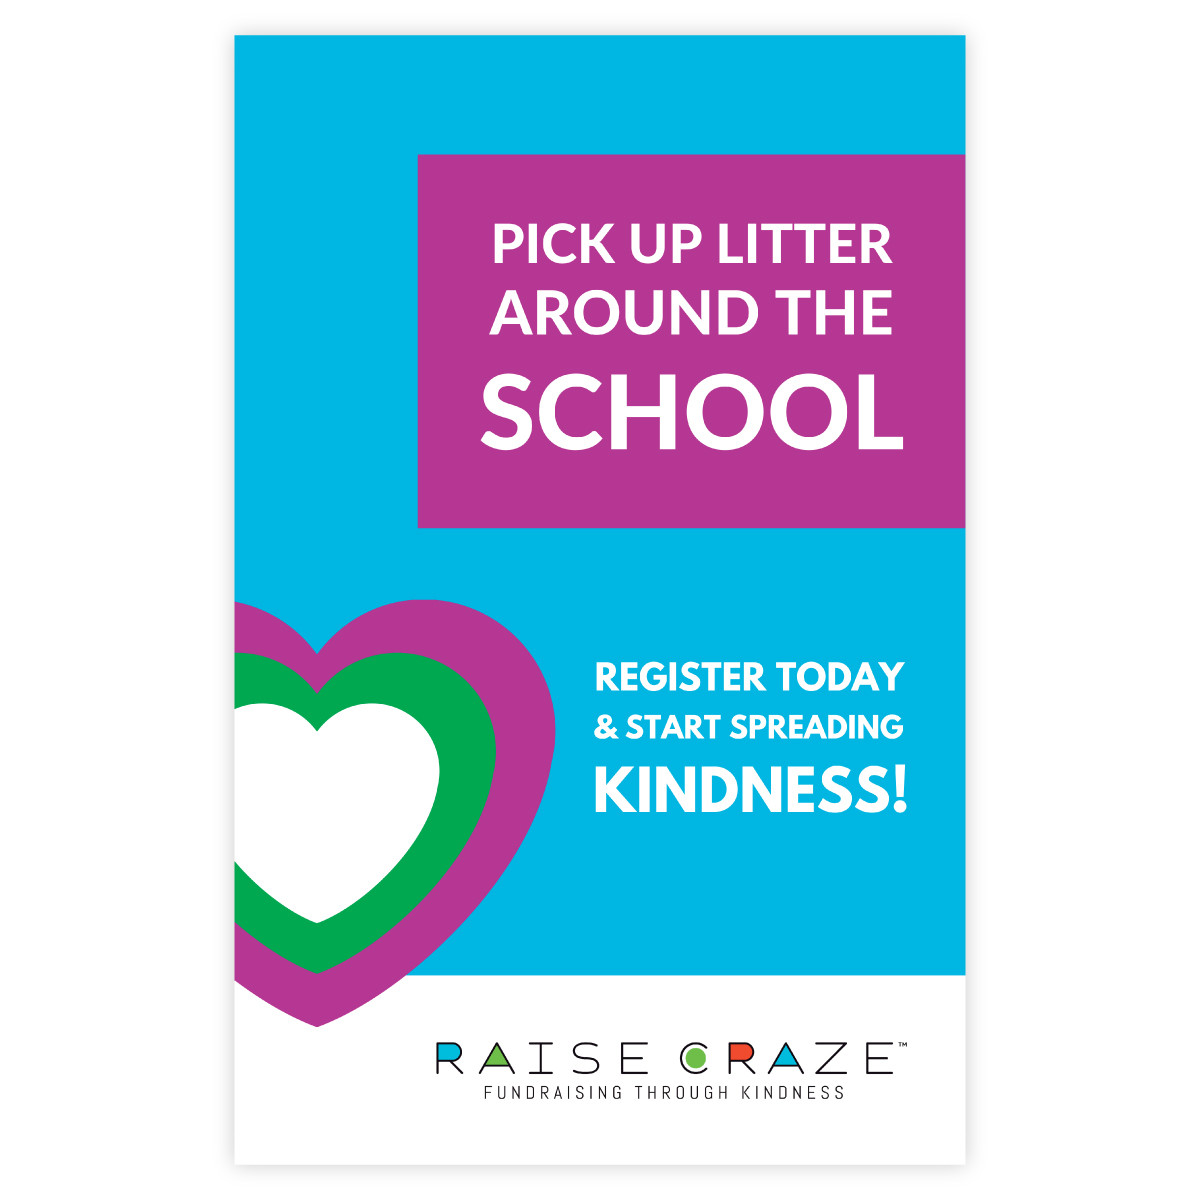 Raise Craze Poster - Pick Up Litter Around the School